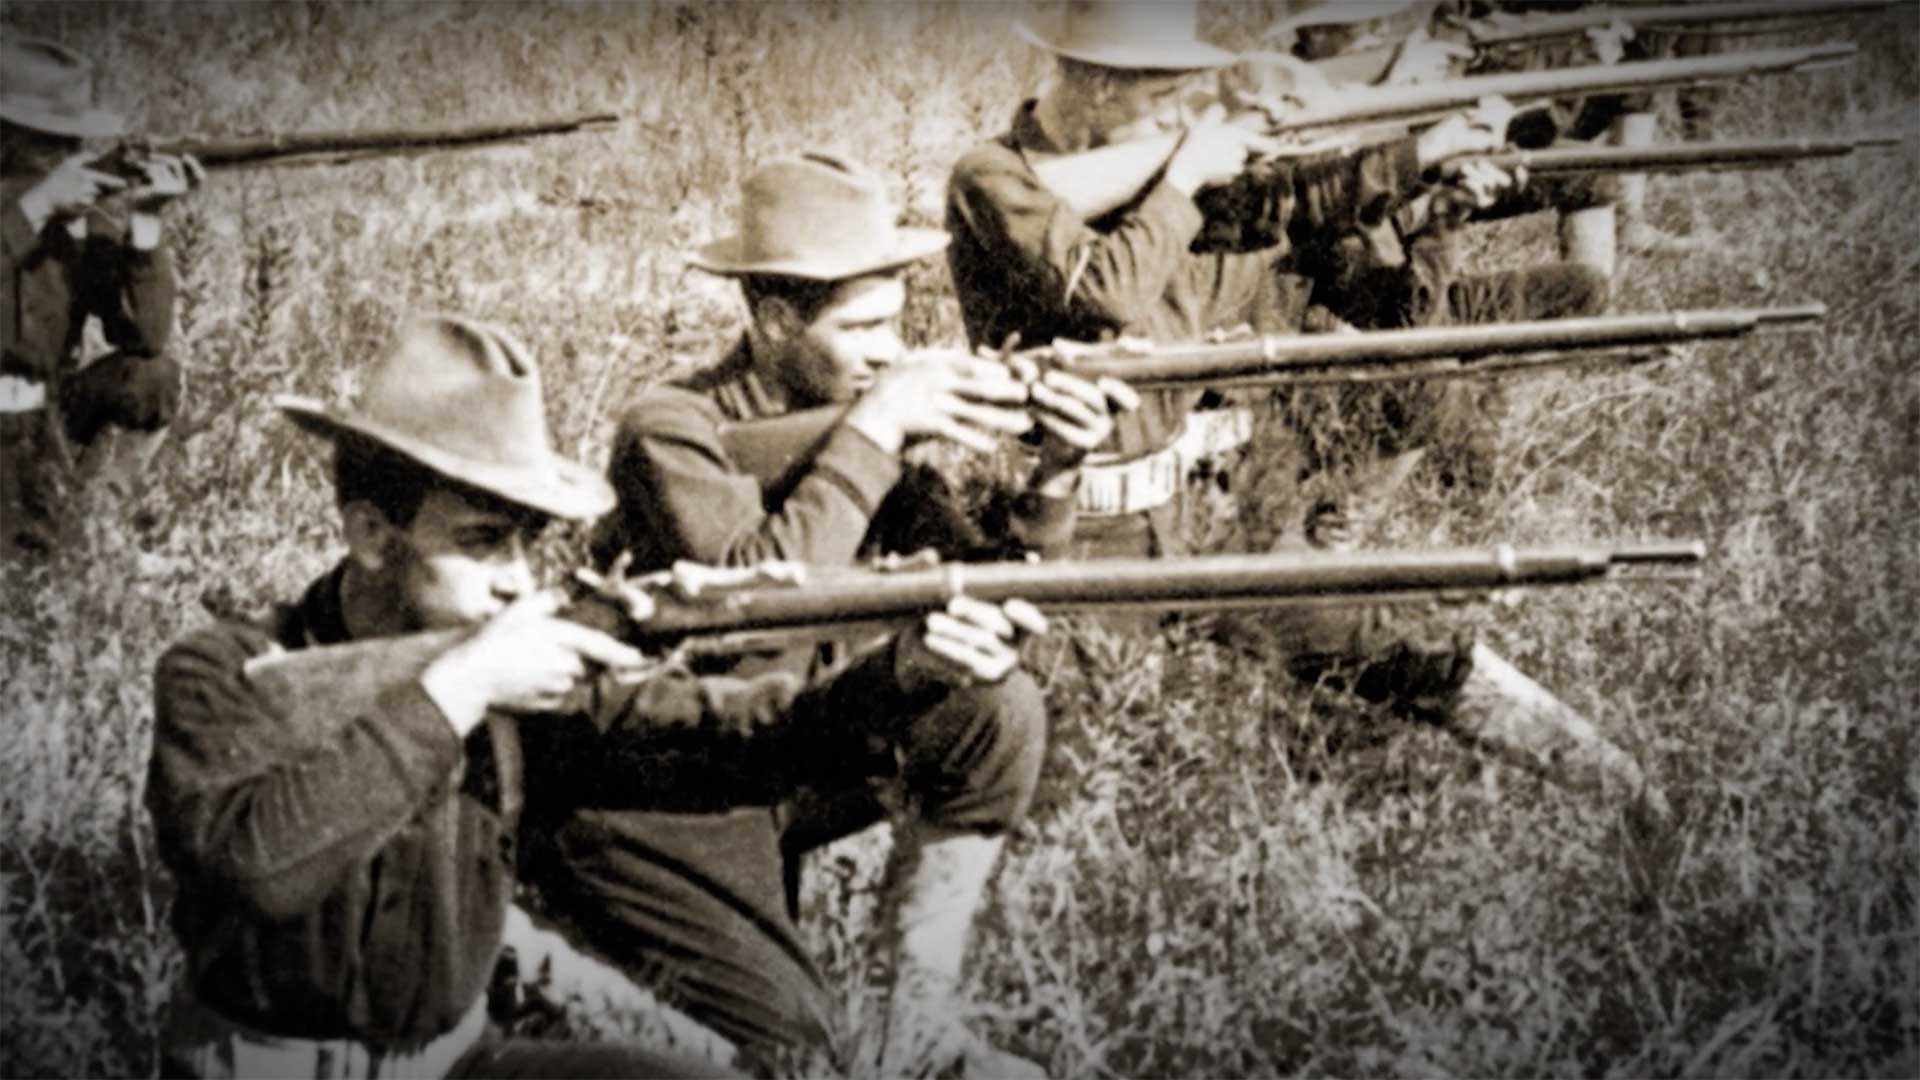 springfield 1898 shotgun